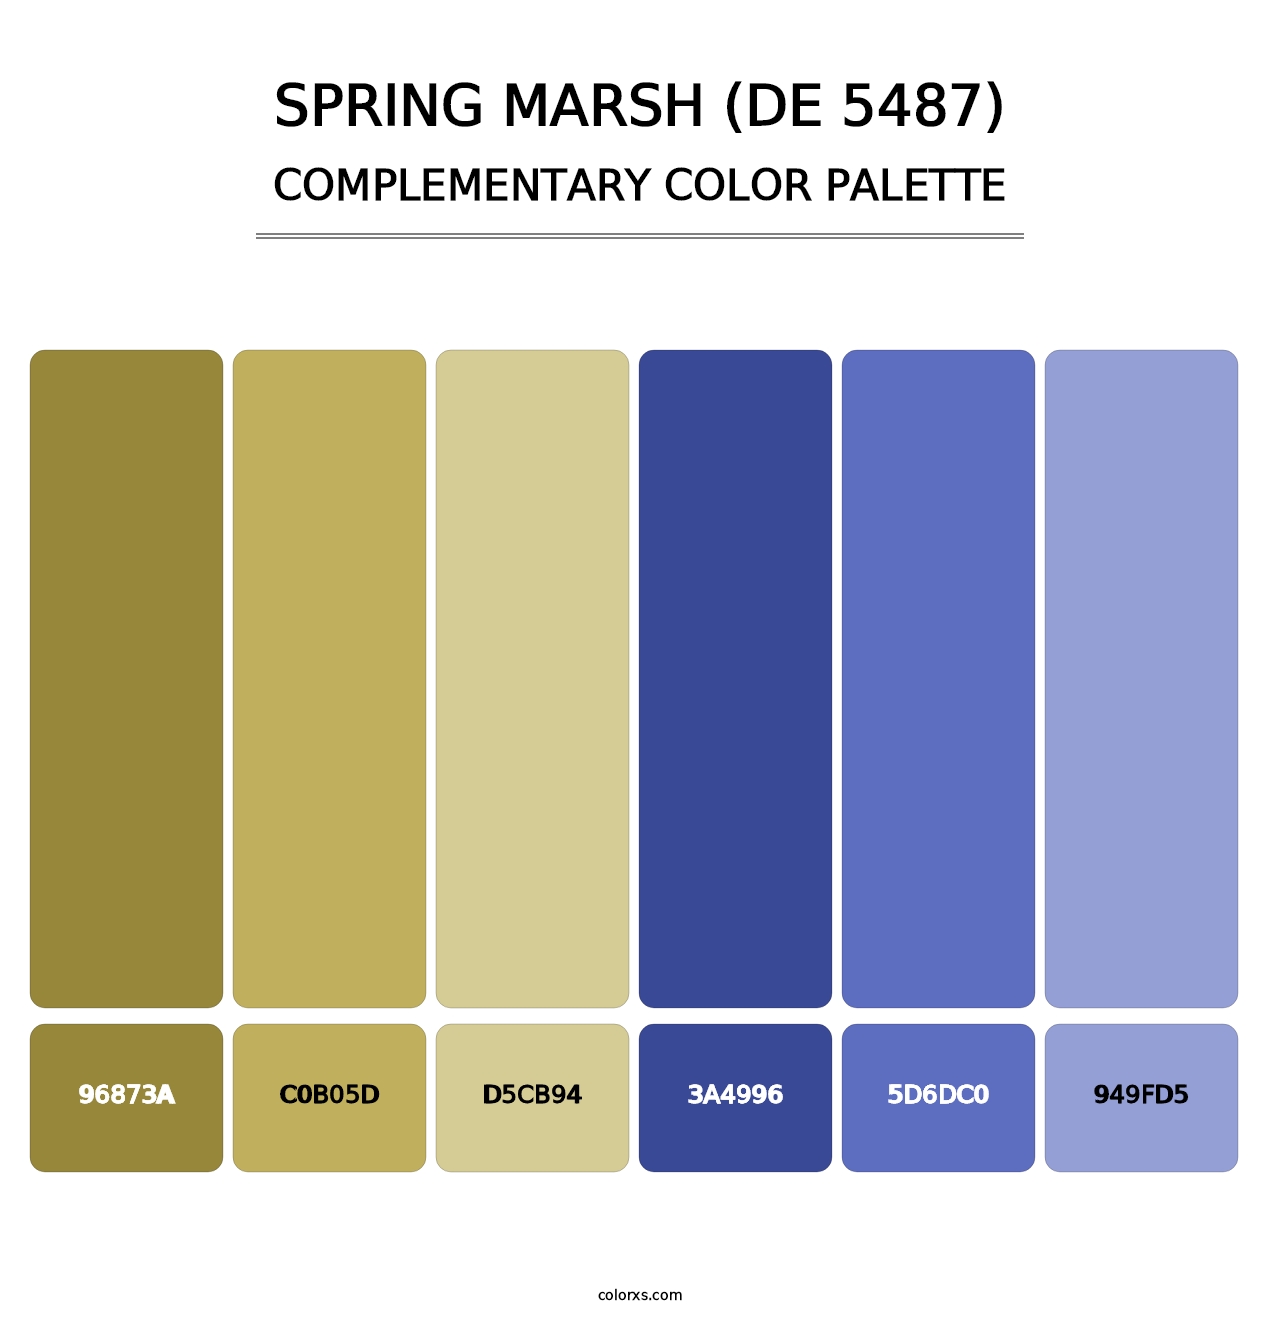 Spring Marsh (DE 5487) - Complementary Color Palette